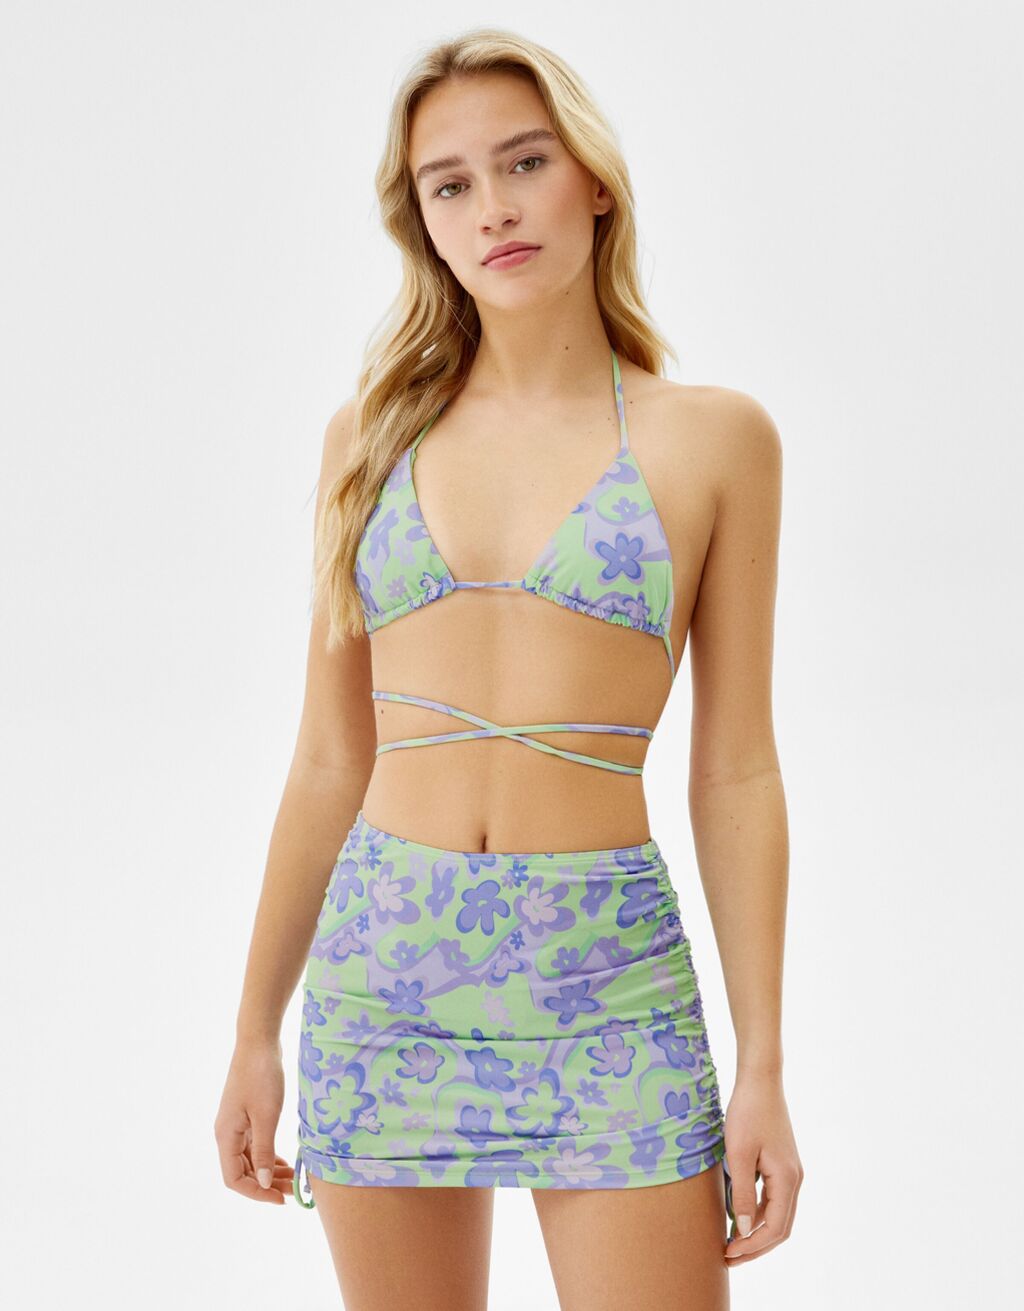 Bikini and sarong set with a psychedelic print